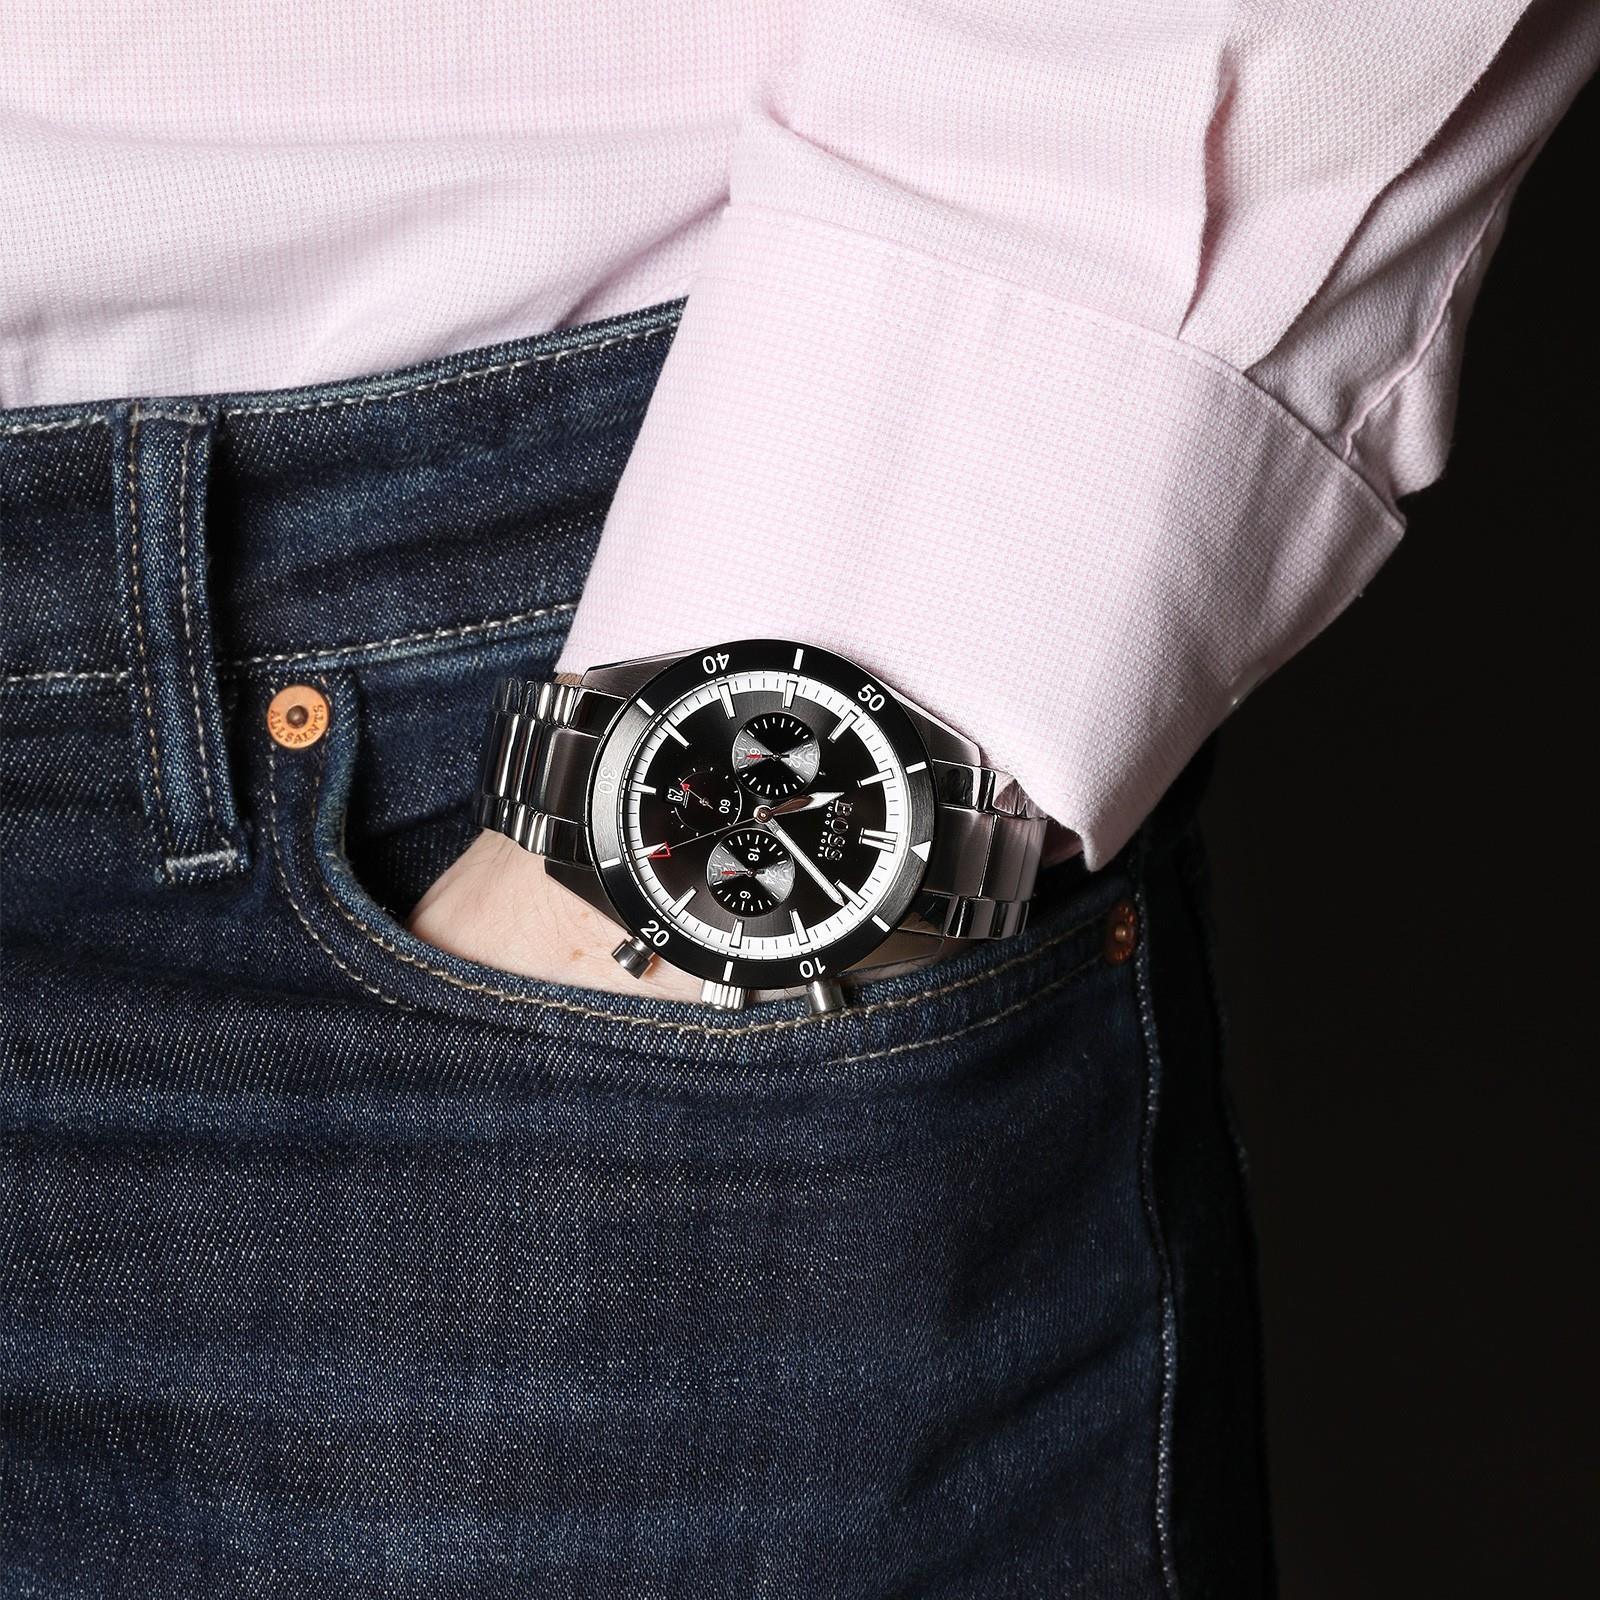 Hugo Boss 1513862 Men's Watch - Watch Home™